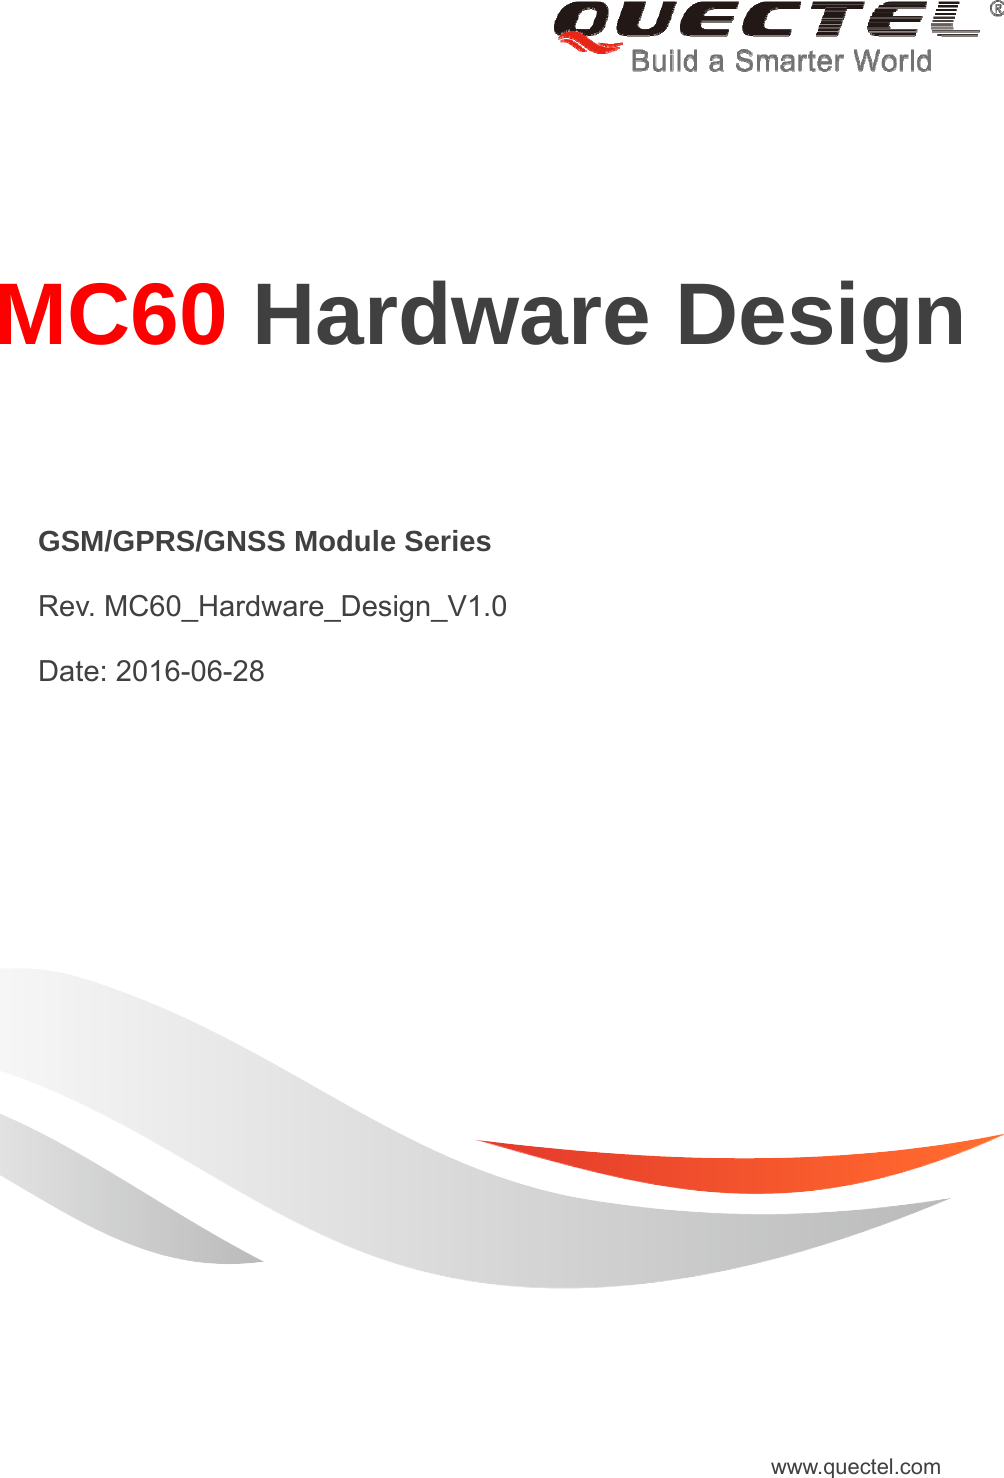     MC60 Hardware Design   GSM/GPRS/GNSS Module Series  Rev. MC60_Hardware_Design_V1.0  Date: 2016-06-28 www.quectel.com 